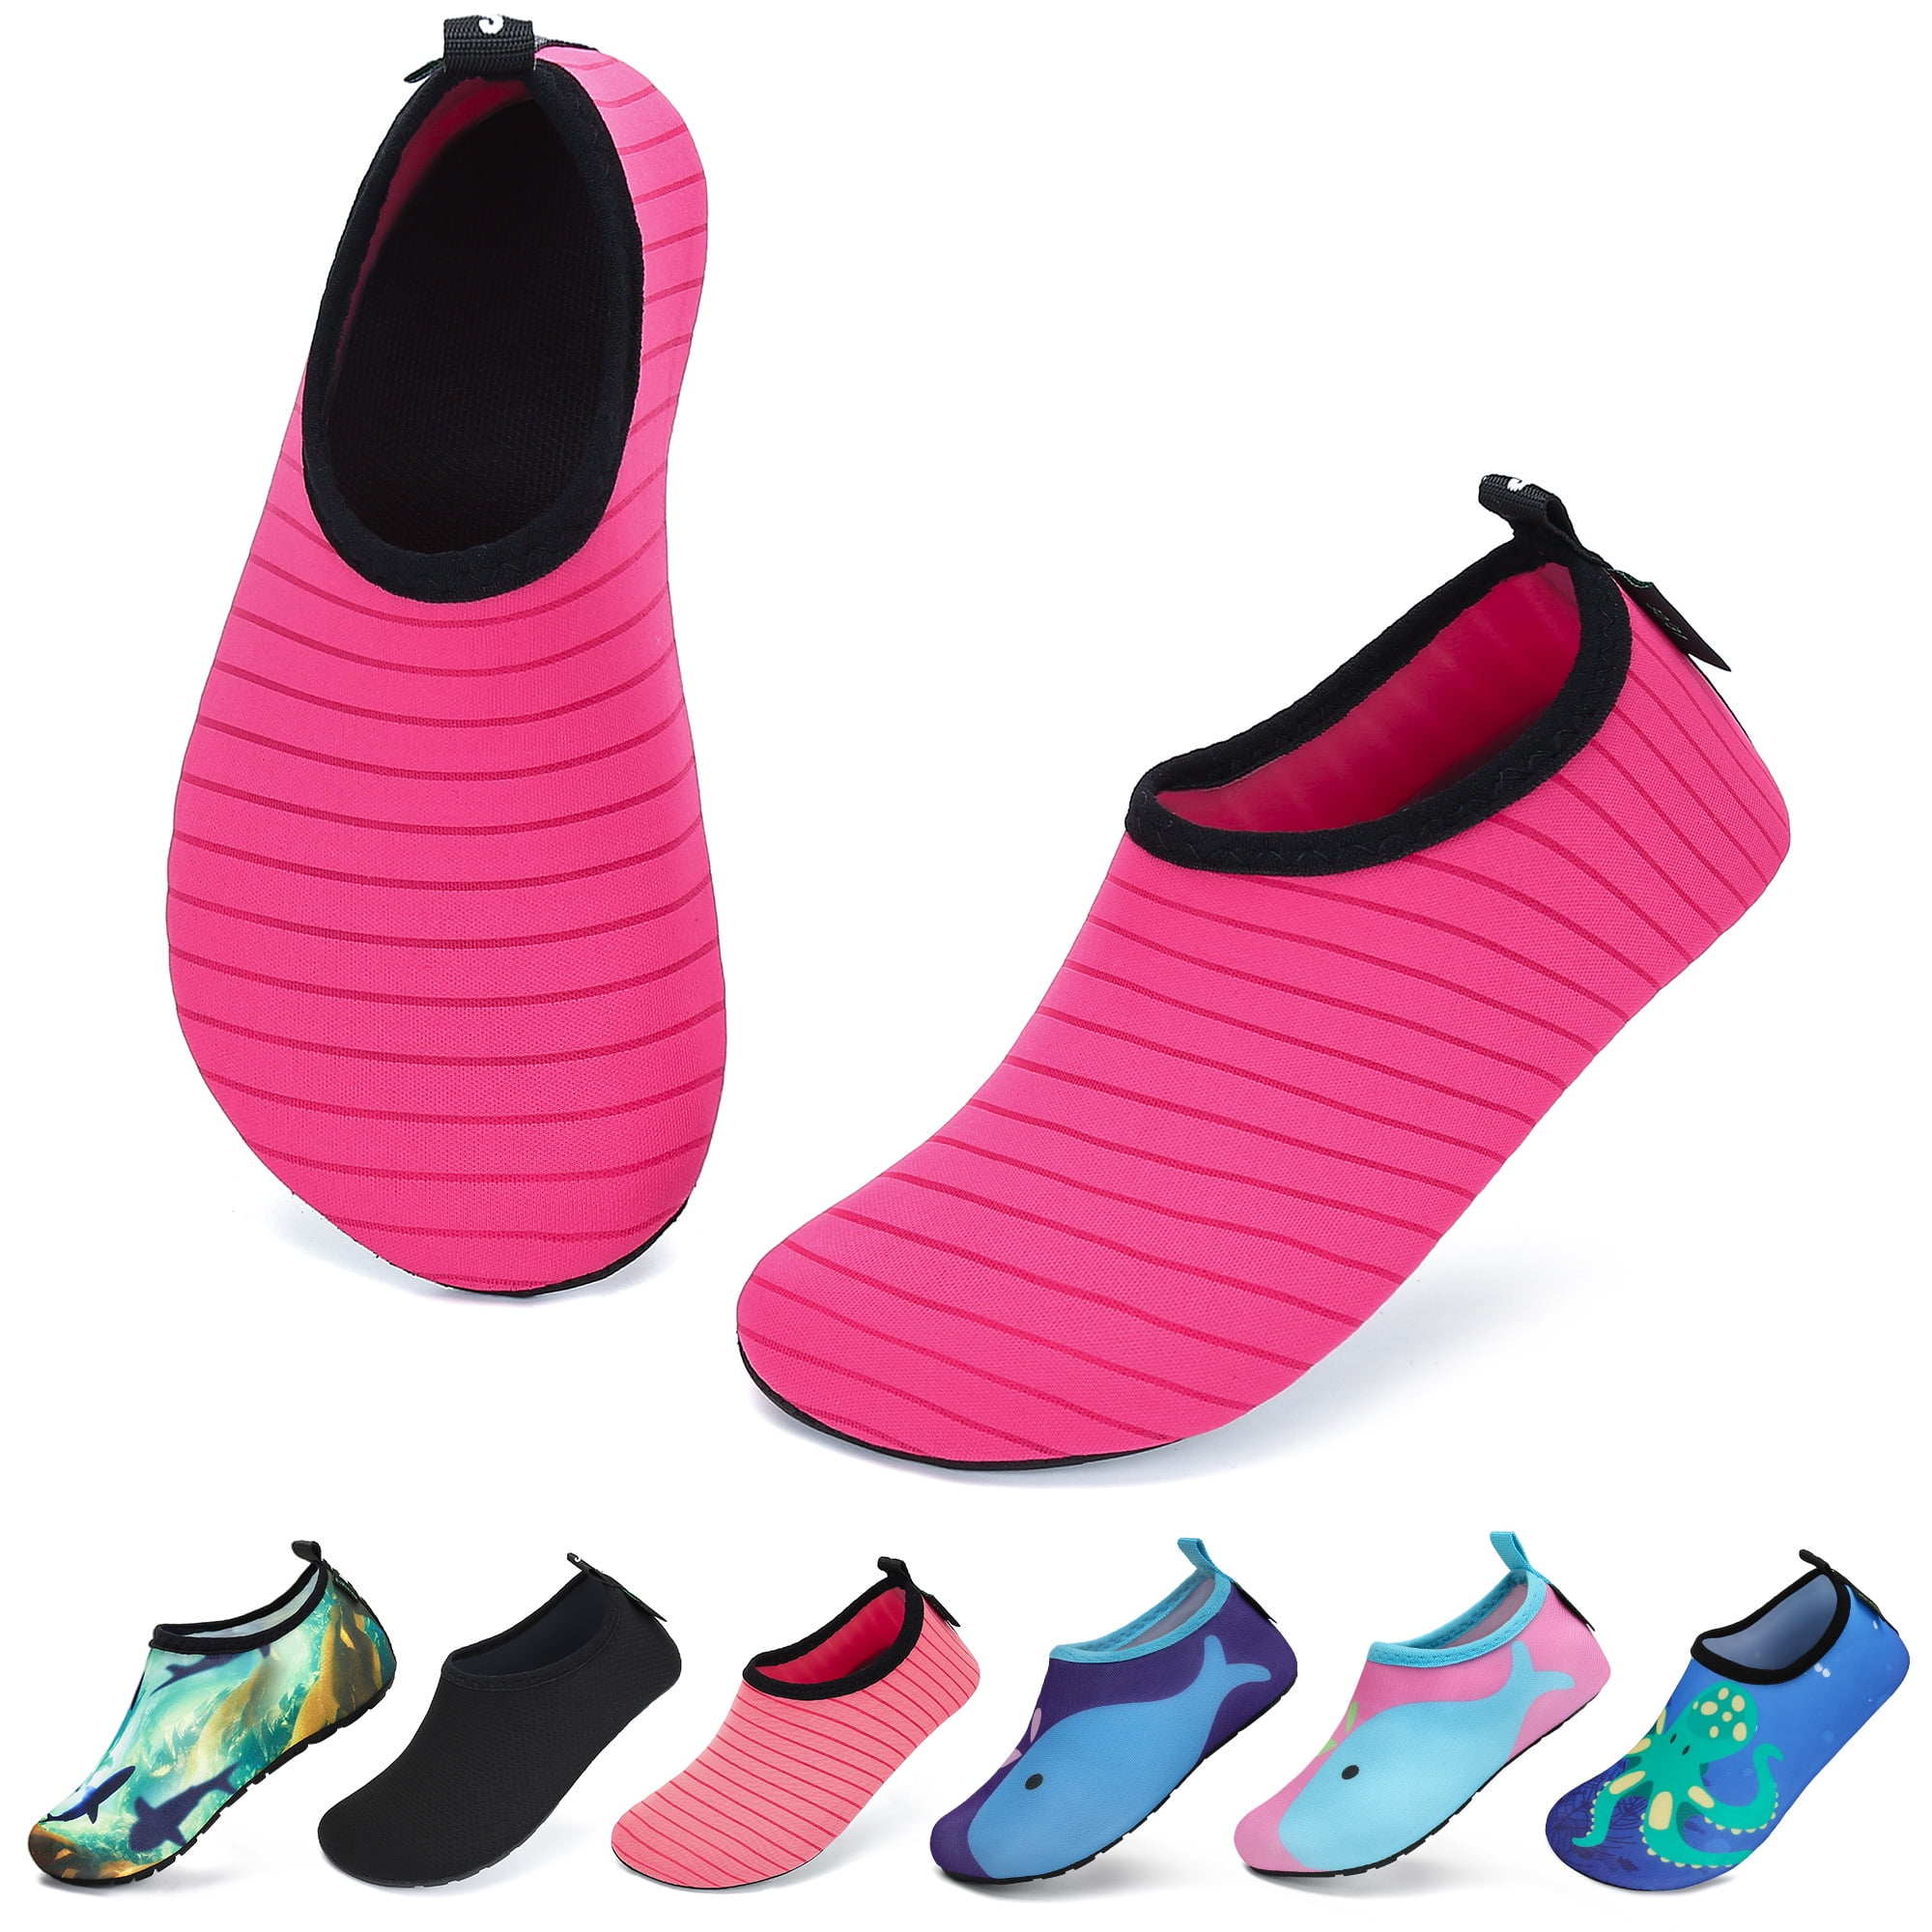 SAGUARO Boys Girls Barefoot Water Shoes Quick Dry Non-Slip Aqua Socks Outdoor Sports Beach Swimming Pool